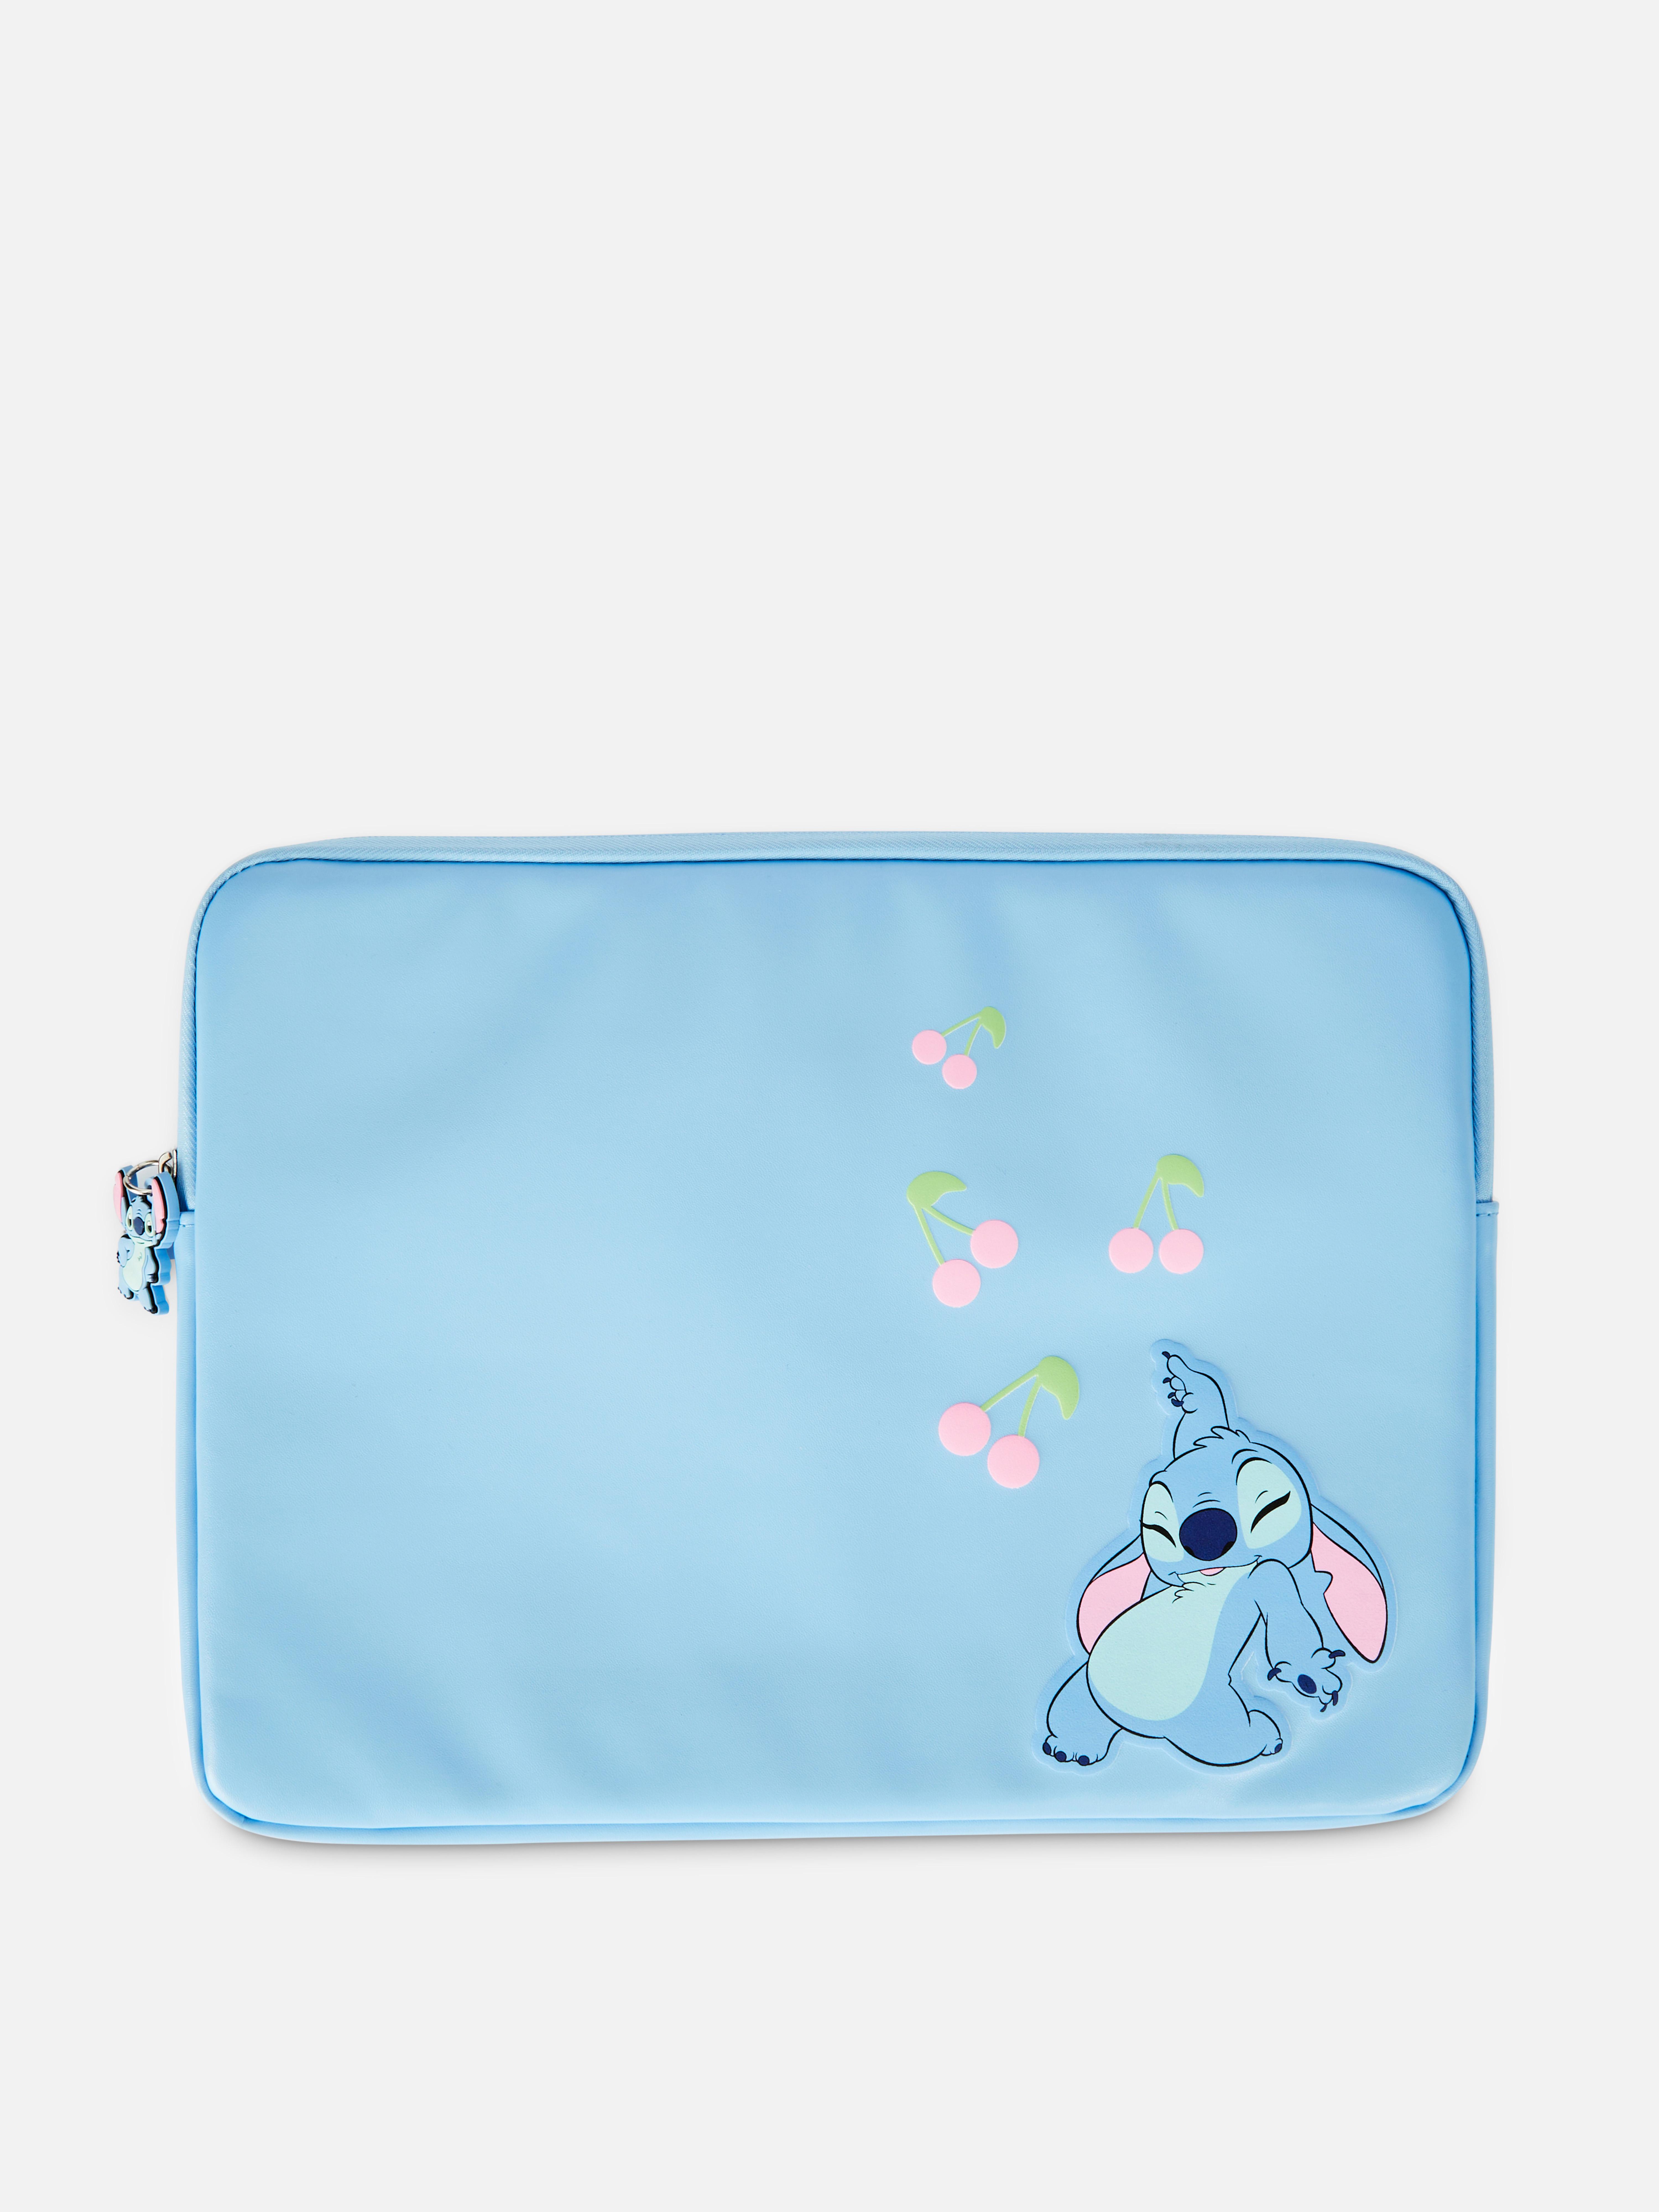 Disney’s Lilo & Stitch Laptop Sleeve